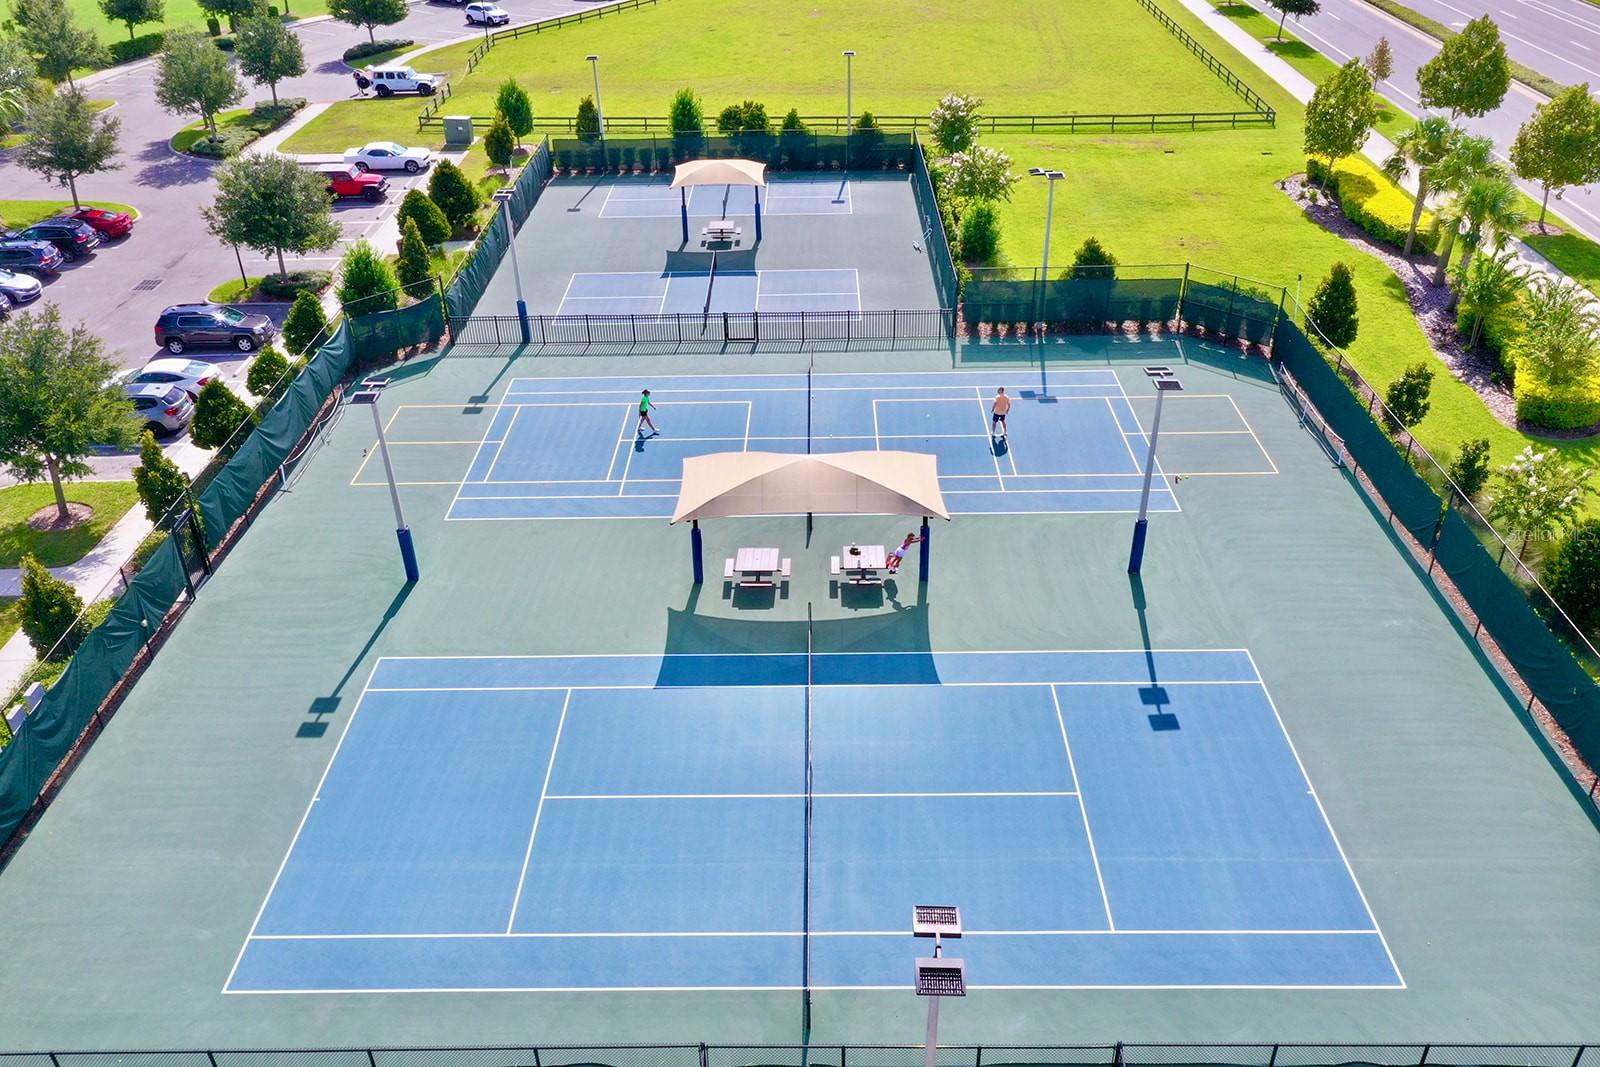 Pickleball/Tennis Courts